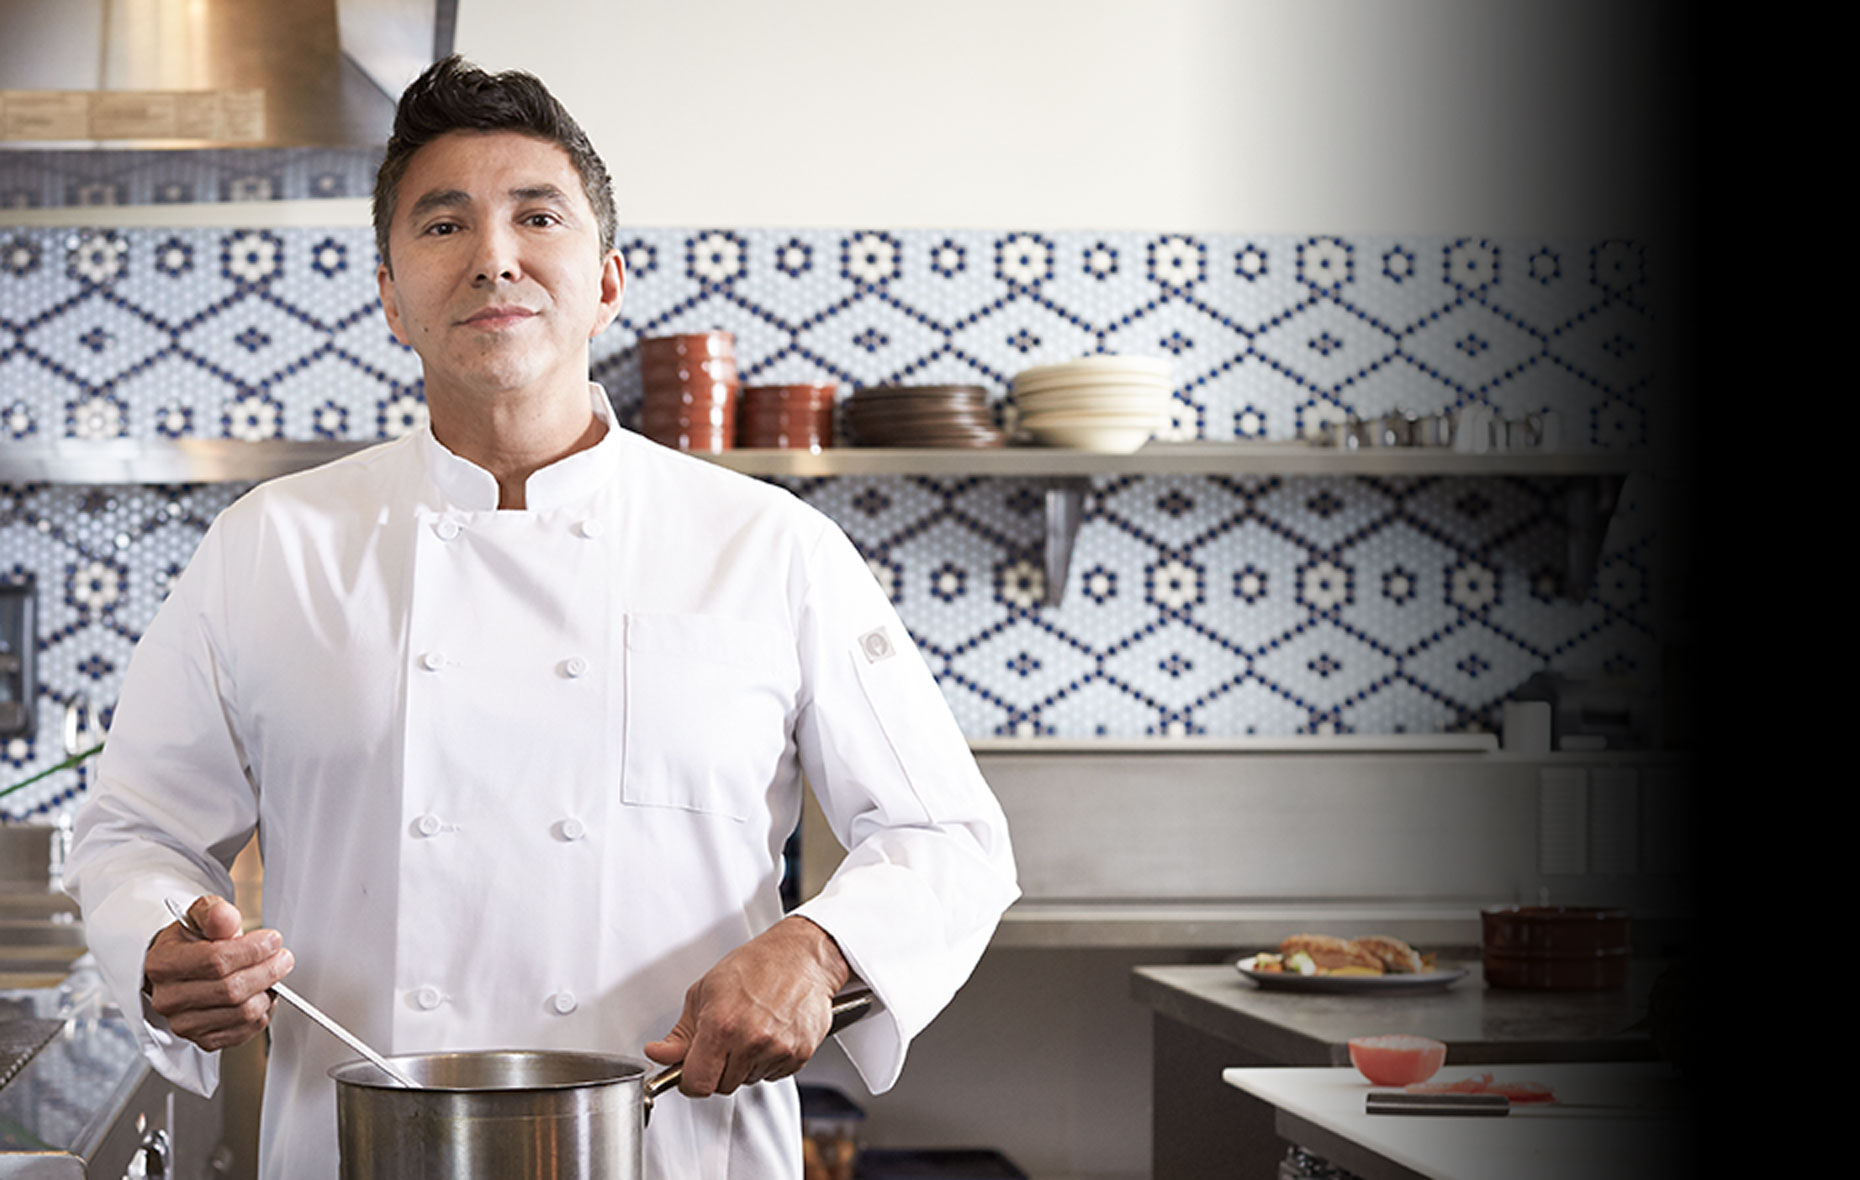 Chefworks™白色标志厨师外套的厨师在厨房里